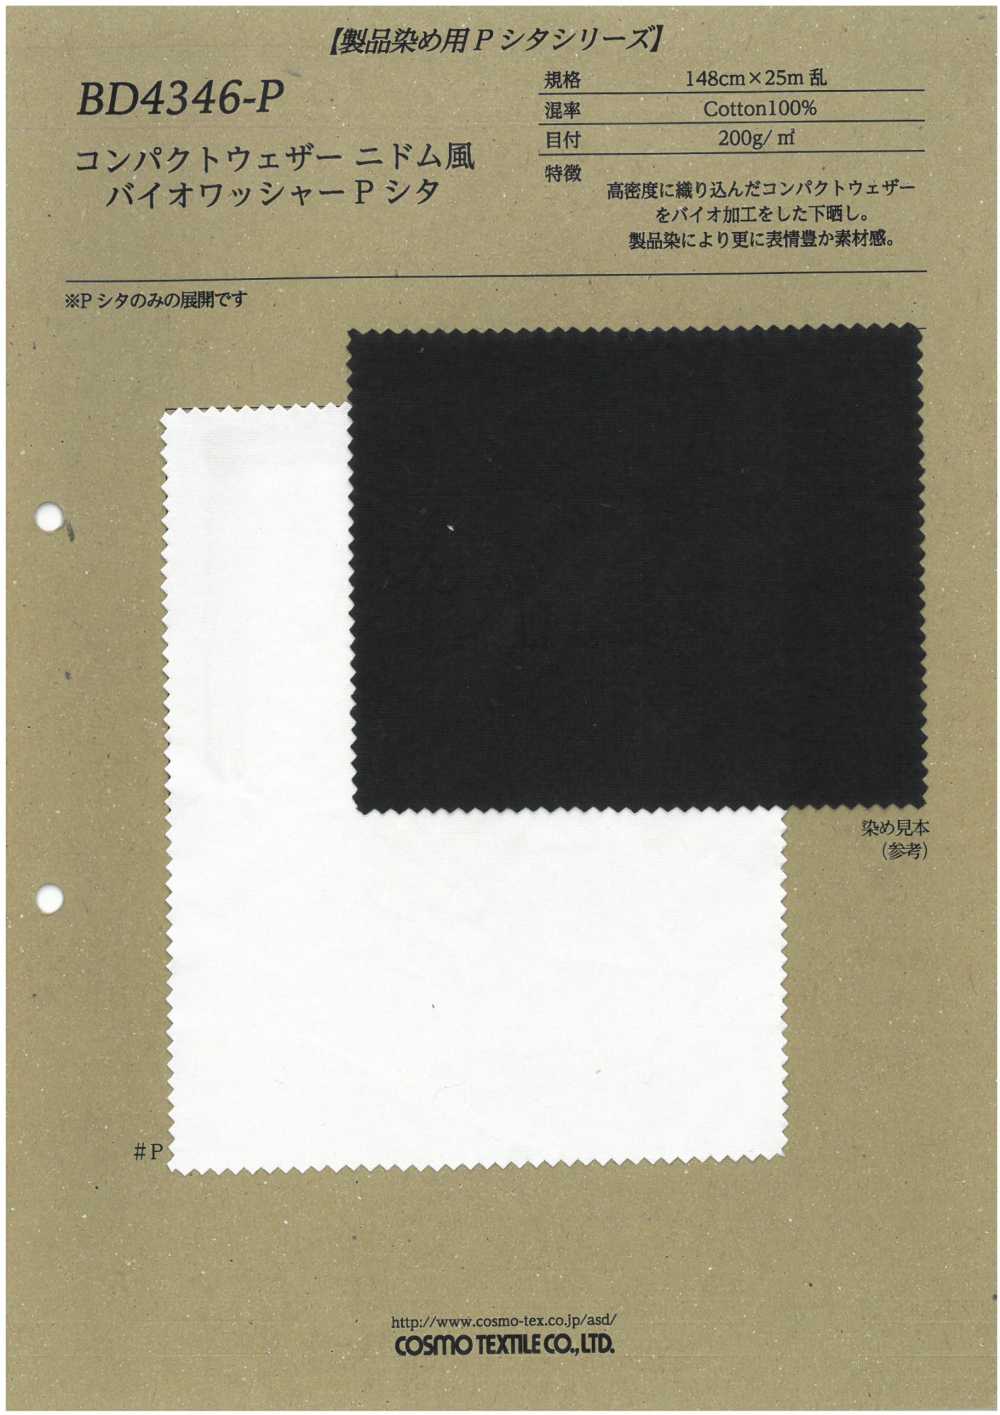 BD4346-P Kompaktes Wettertuch Nidom Style Biowasher Processing P Shita[Textilgewebe] COSMO TEXTILE